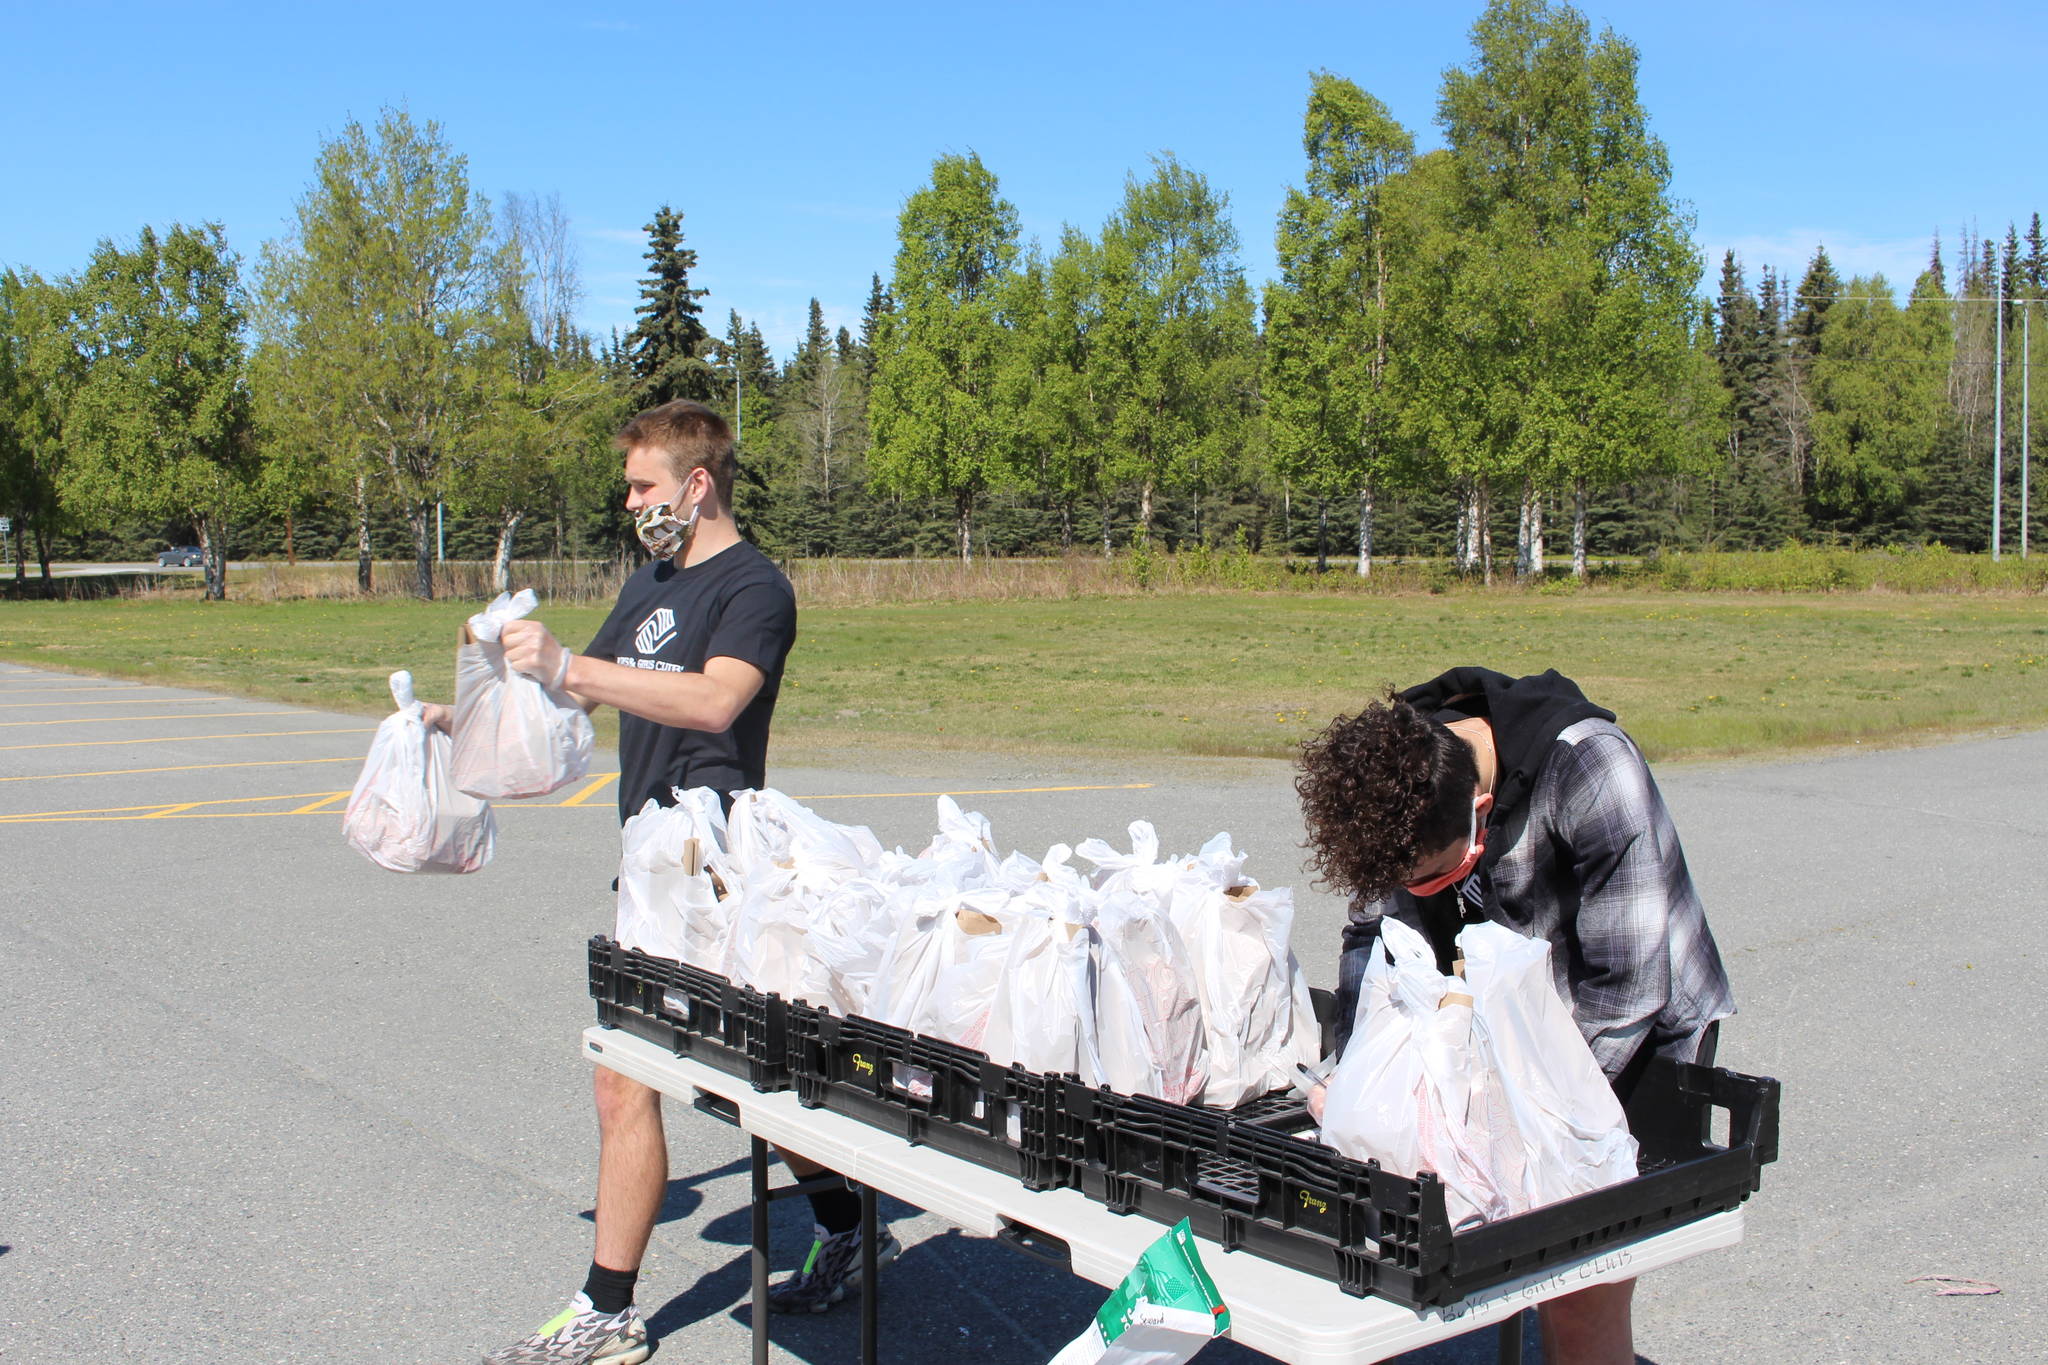 Kenai Peninsula Boys & Girls Clubs employees Michael Eiter, left, and Michael Mysing, right, hand out meals at Kenai Central High School in Kenai, Alaska on May 28, 2020. (Photo by Brian Mazurek/Peninsula Clarion)